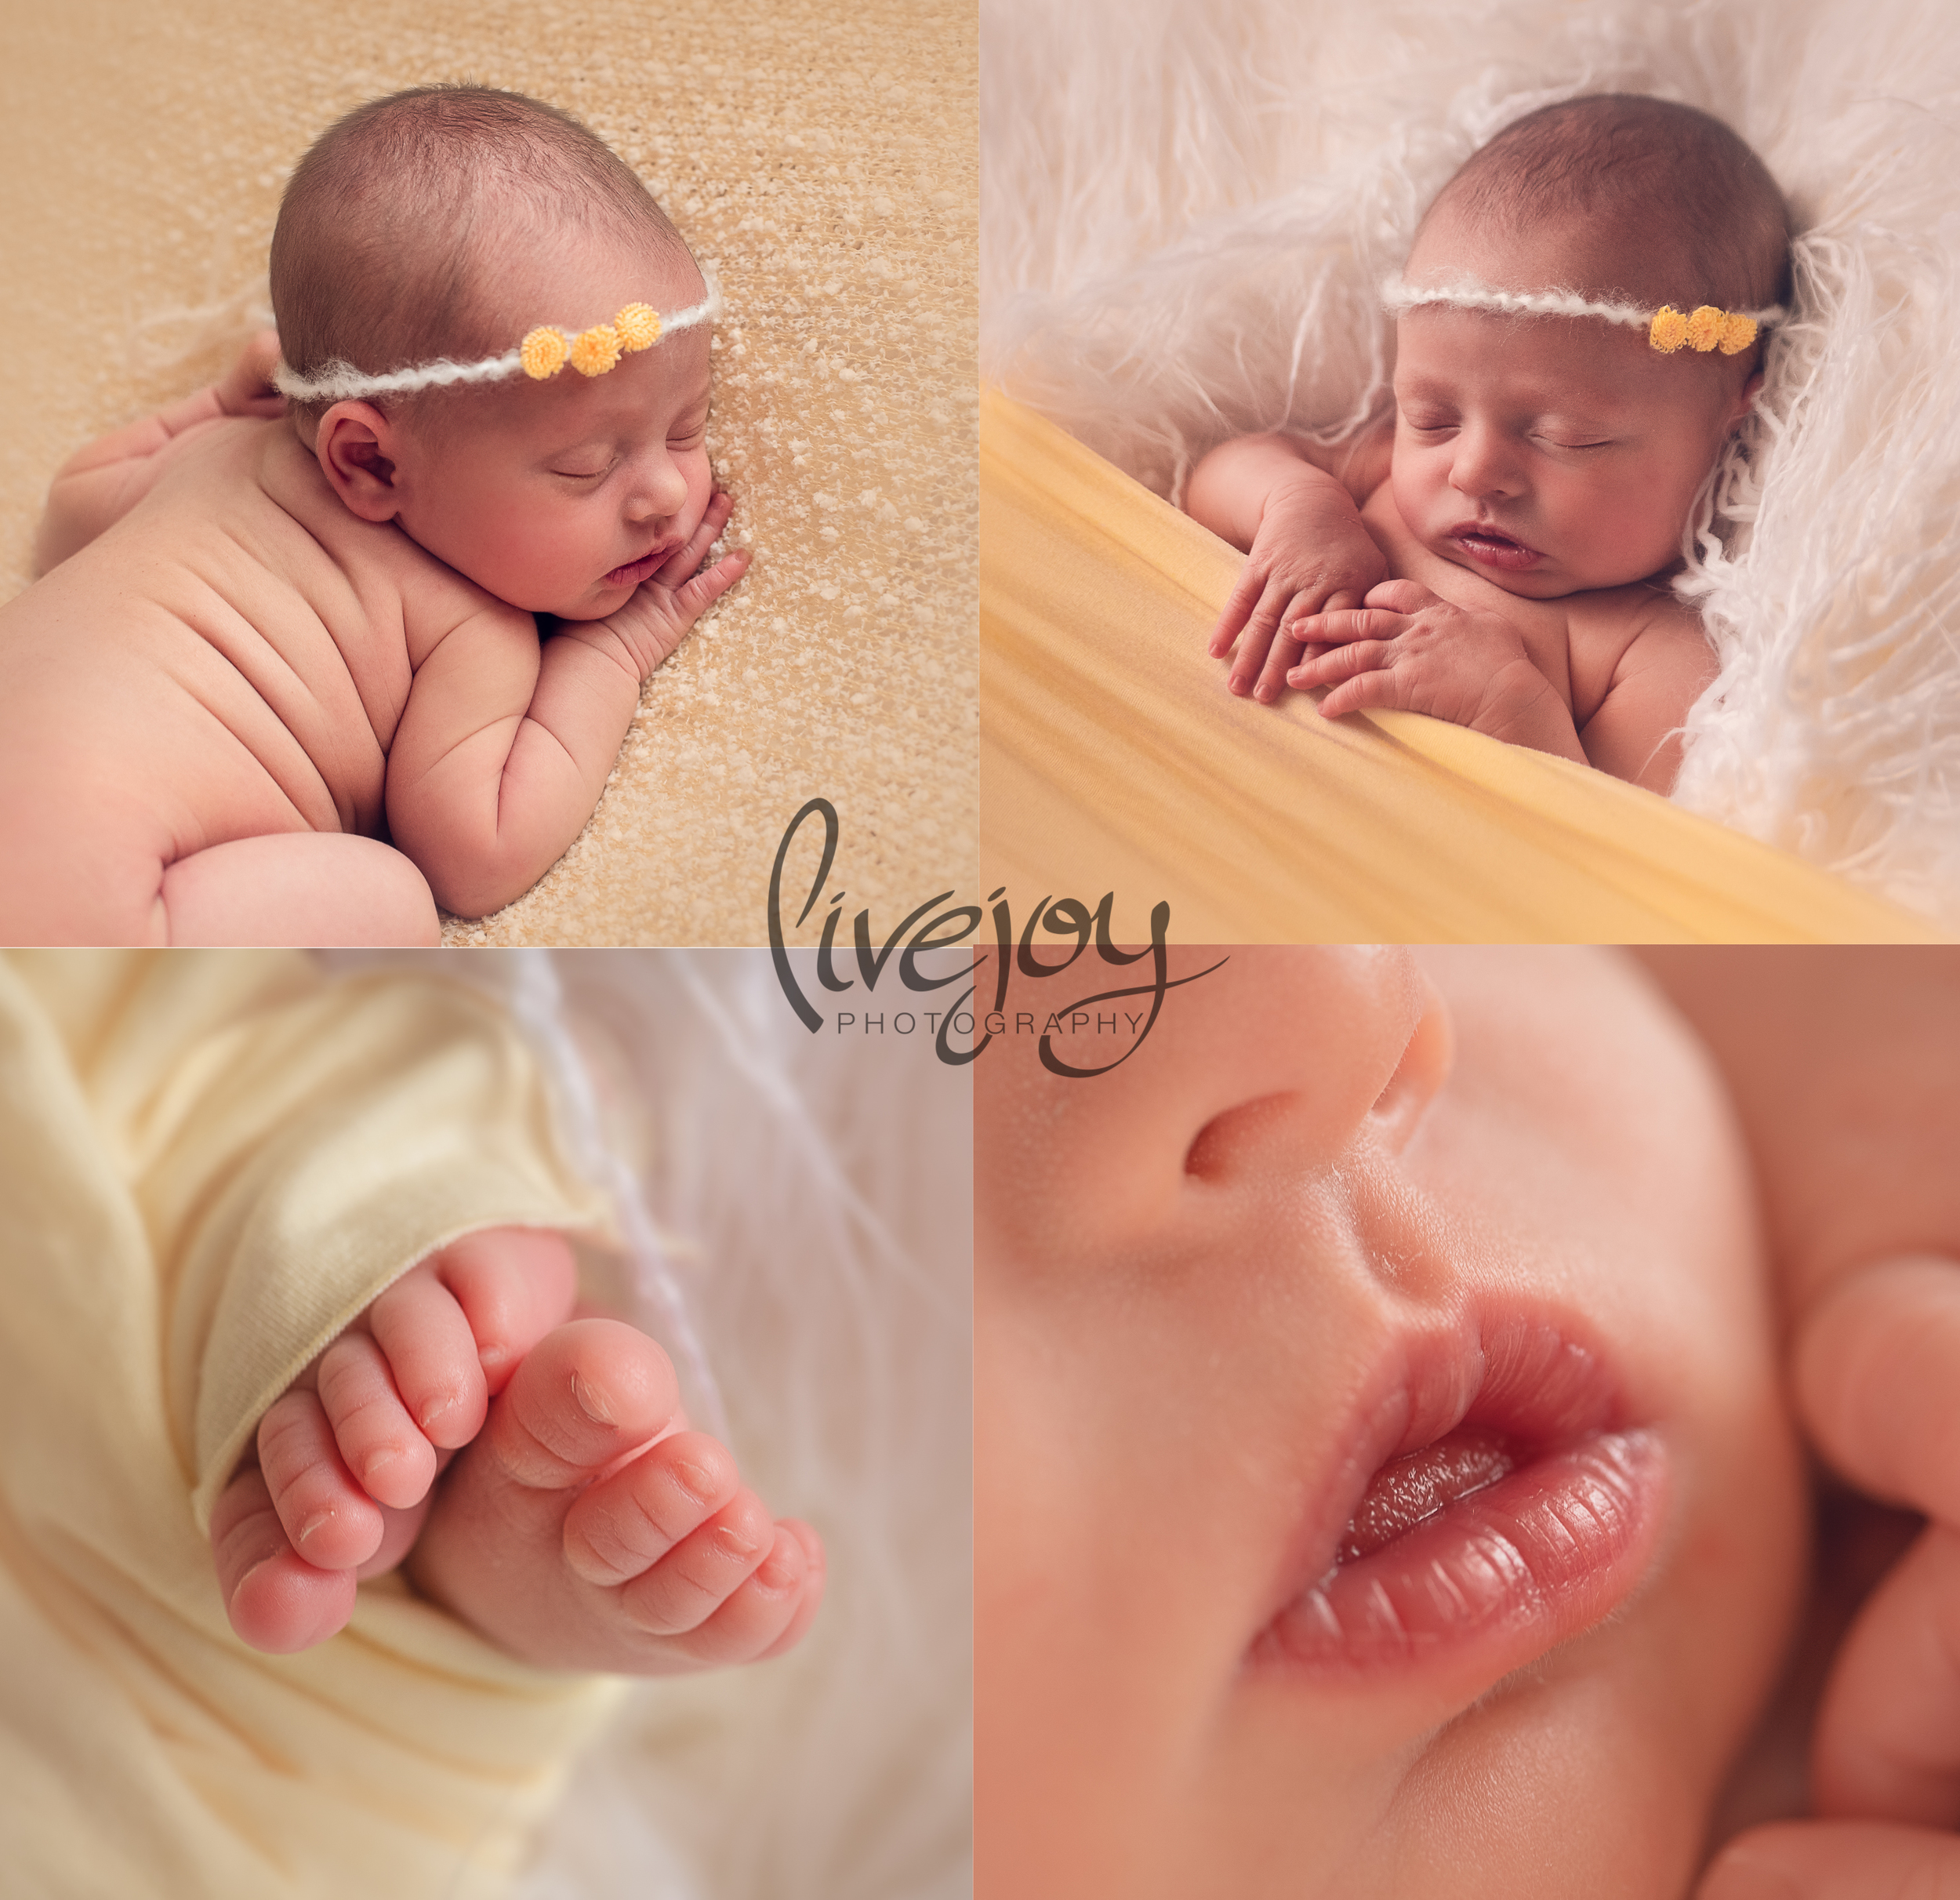 Newborn Photography | LiveJoy Photography yellow | Oregon